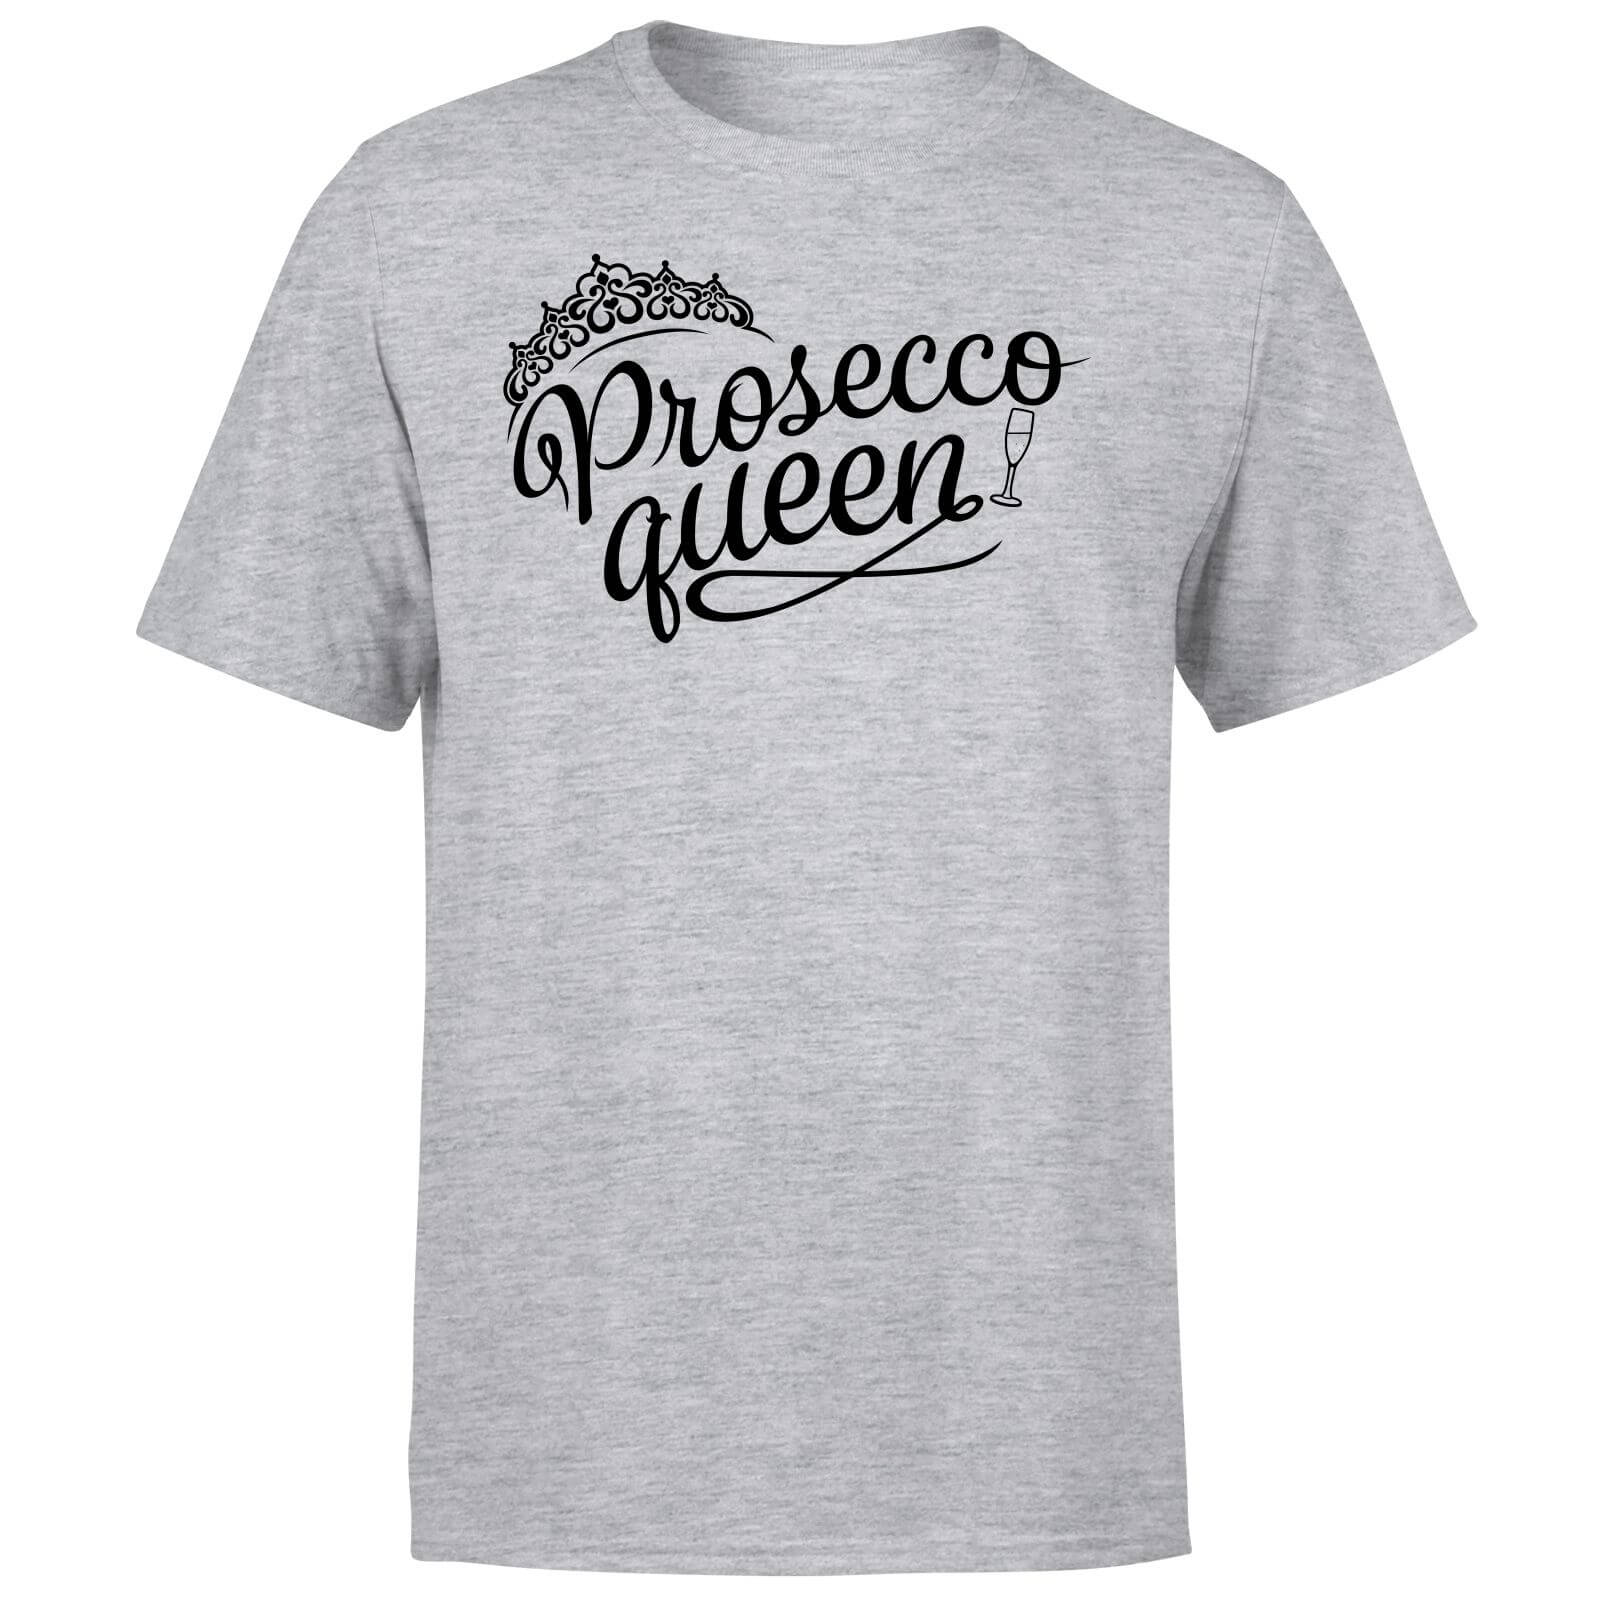 Prosecco Queen T-Shirt - Grey - S - Grey